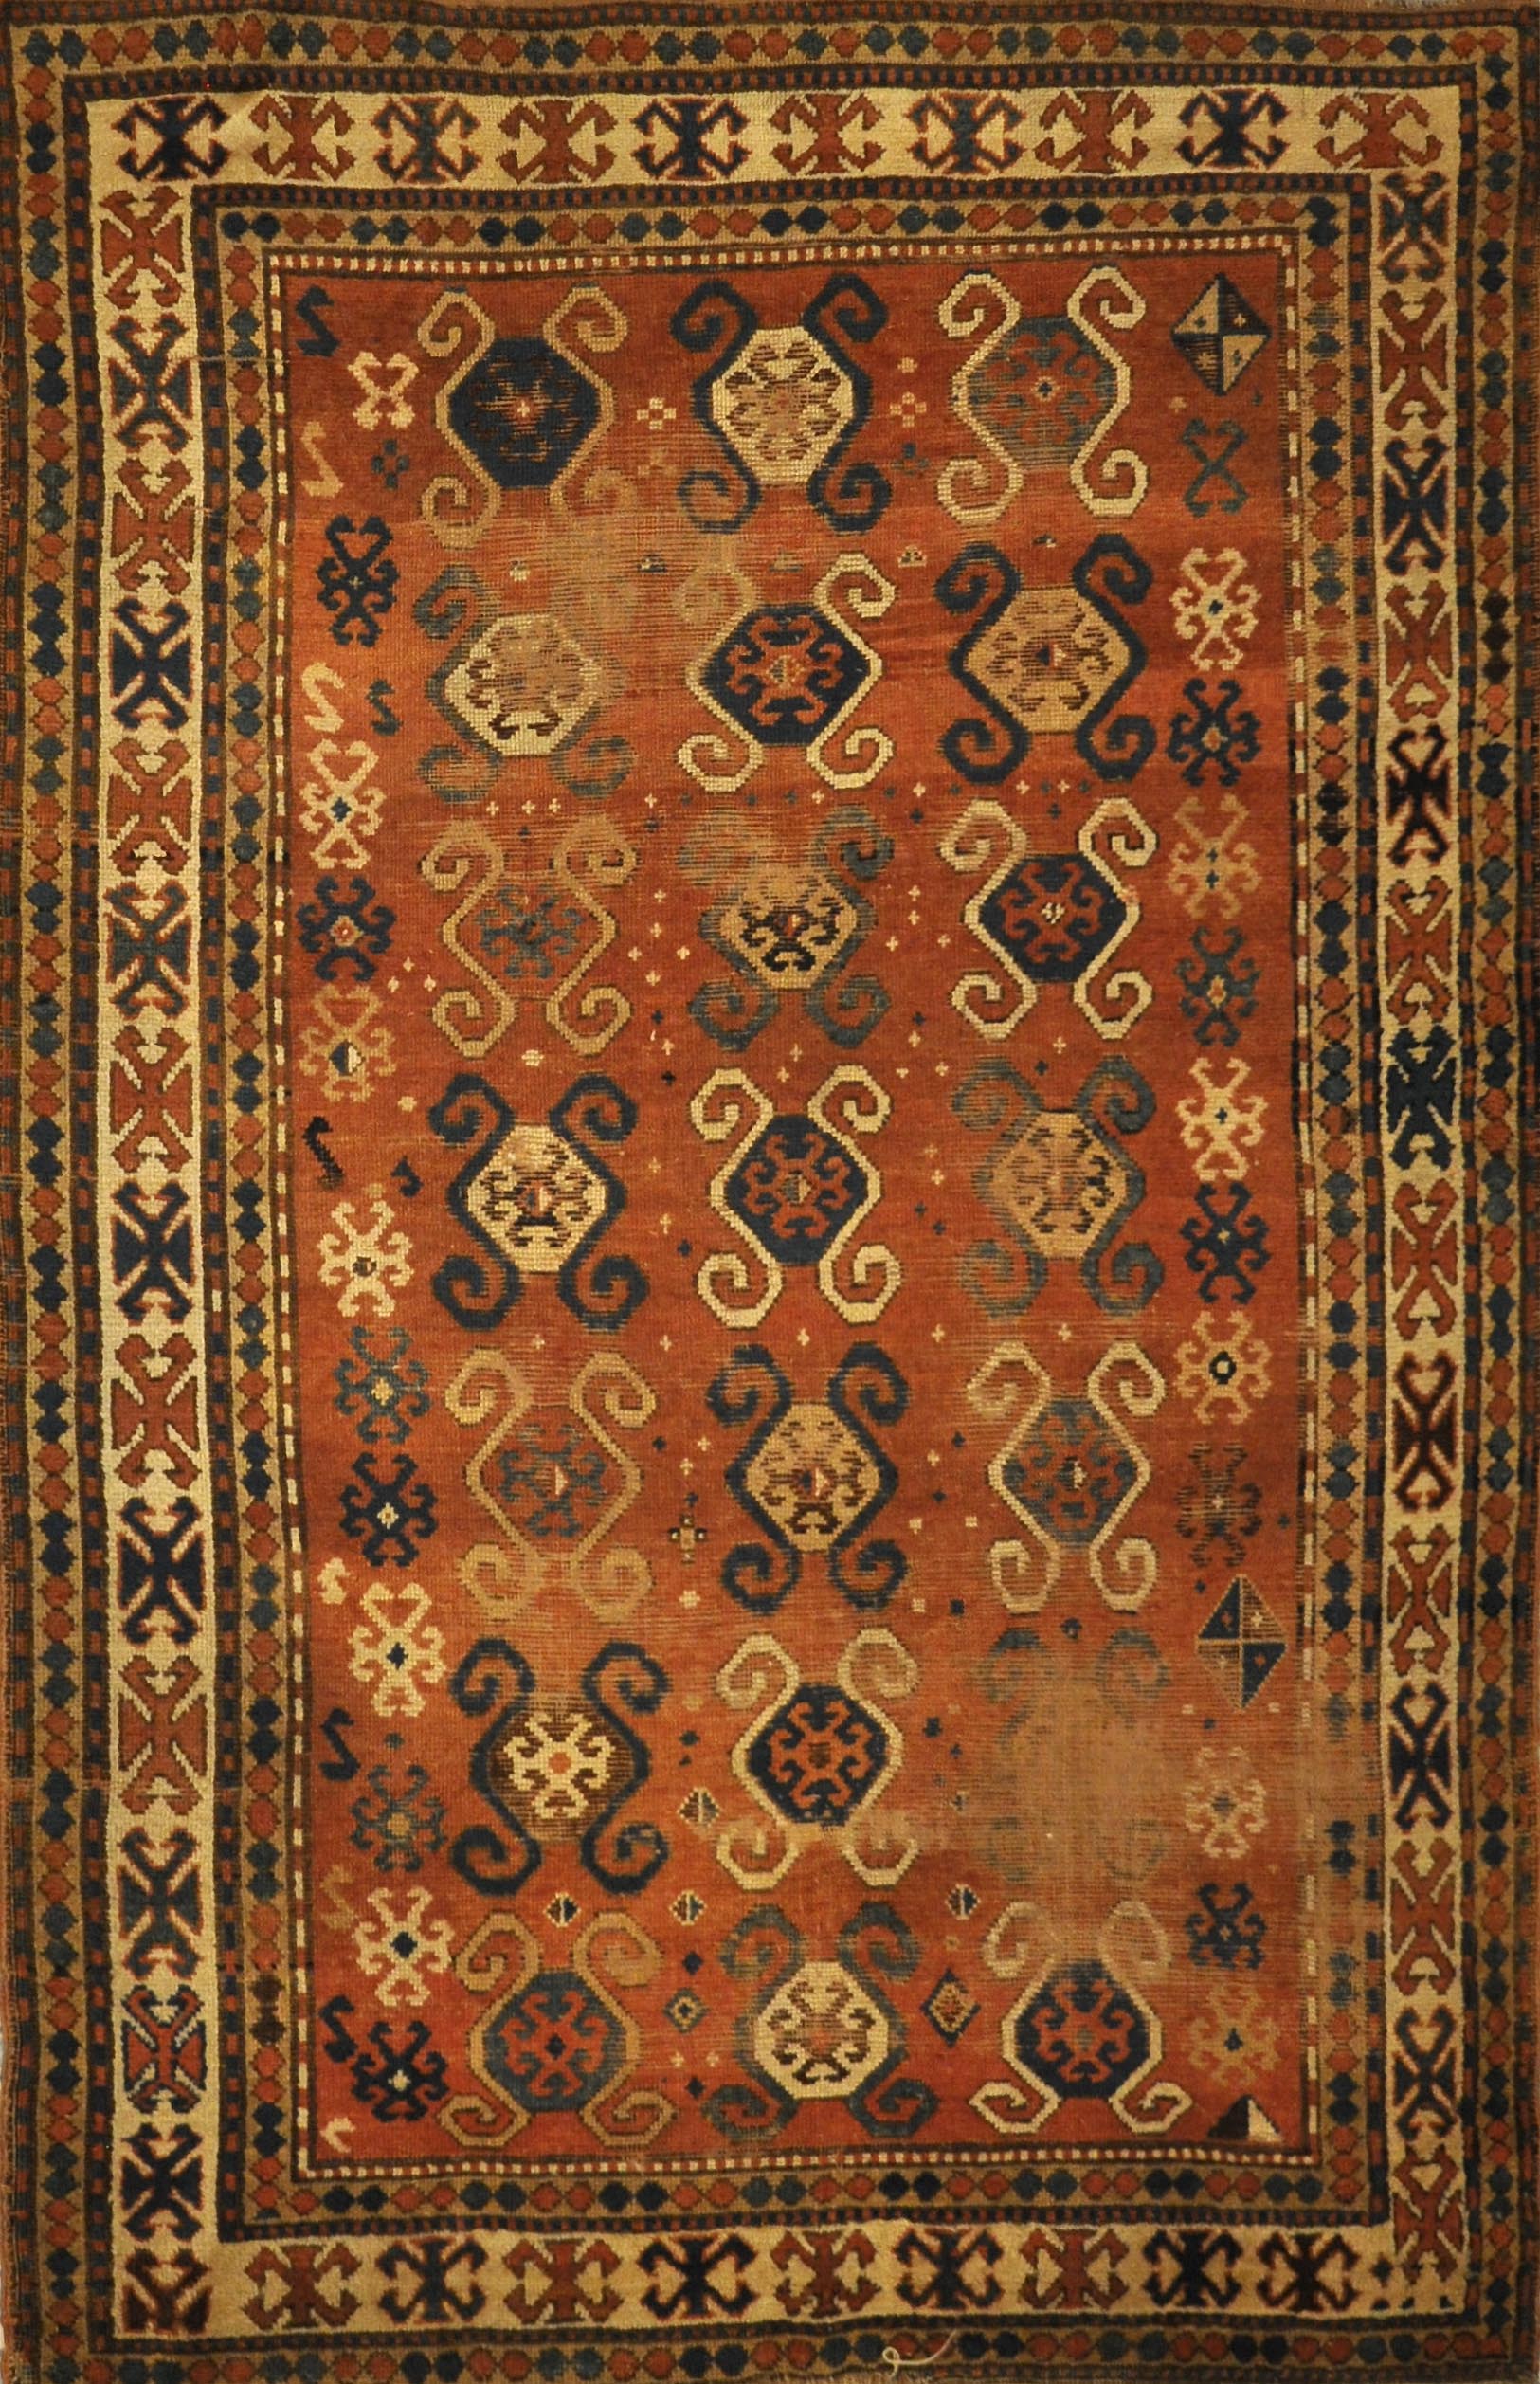 Antique Caucasian Kazak Rug Mid 19th Century. A genuine authentic antique piece of woven carpet art sold by Santa Barbara Design Center Rugs and More.